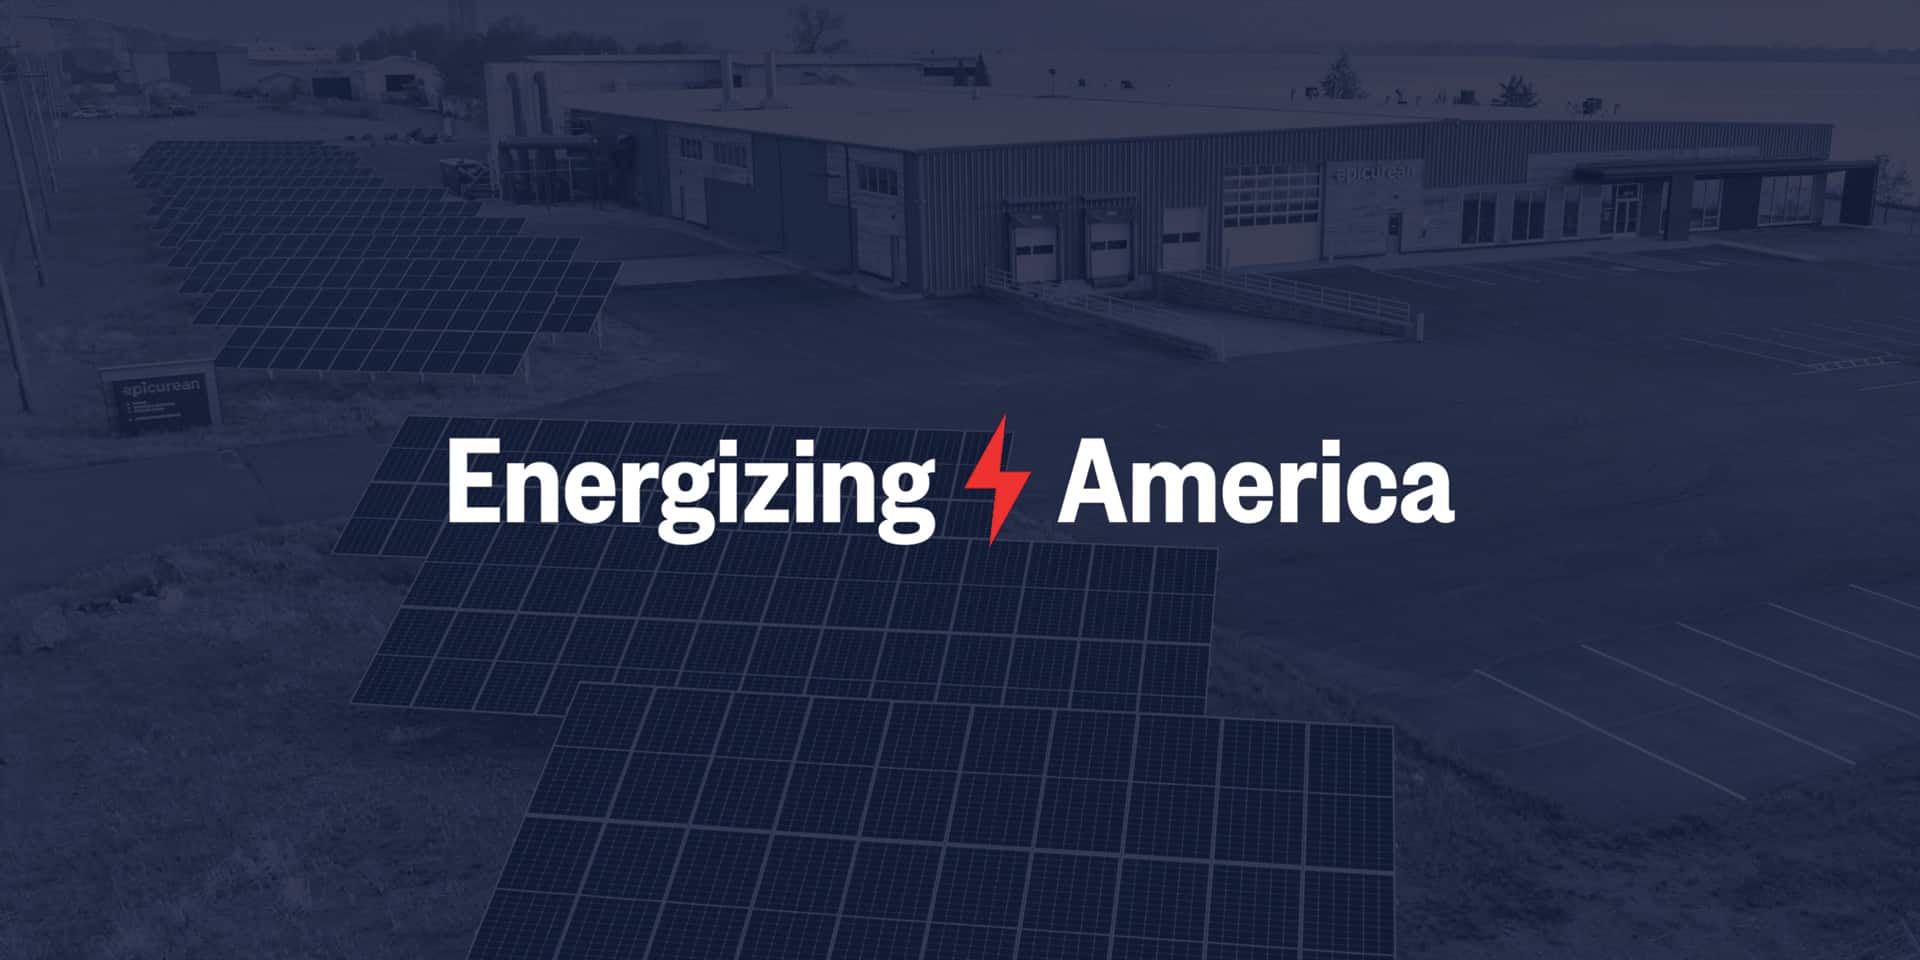 Energizing America Logo over dark background